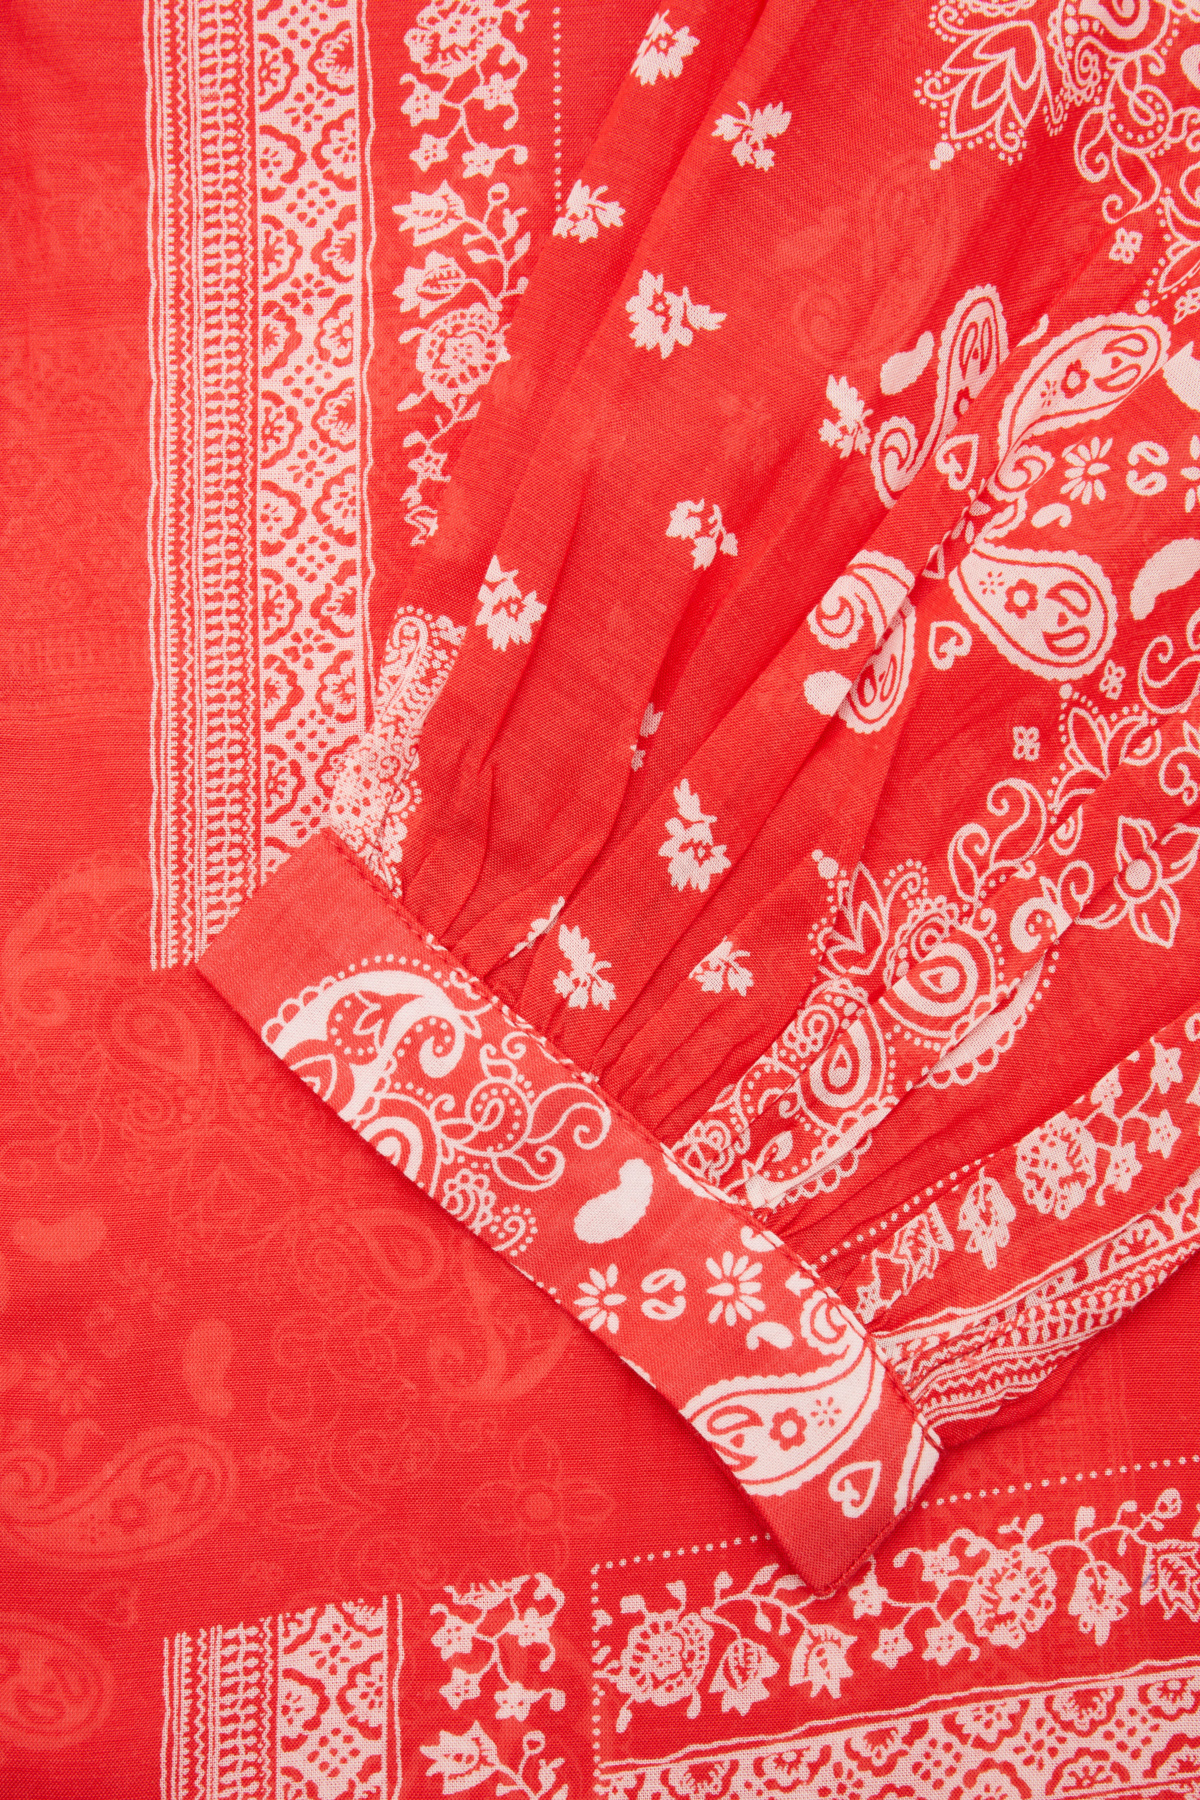 Semicouture Bluse in Rot mit Ornamente-Muster 435429